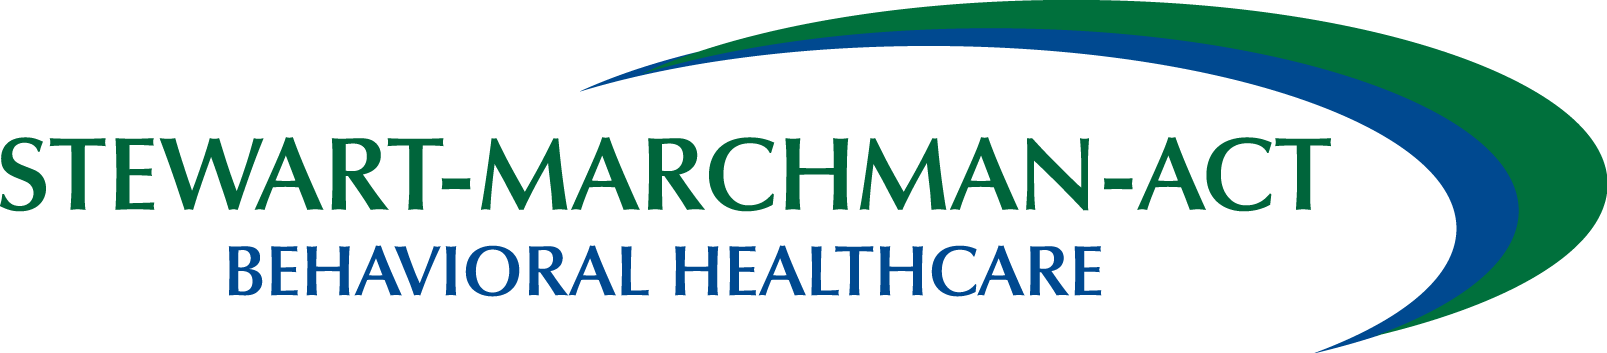 Stewart-Marchman-Act Behavioral Healthcare Logo